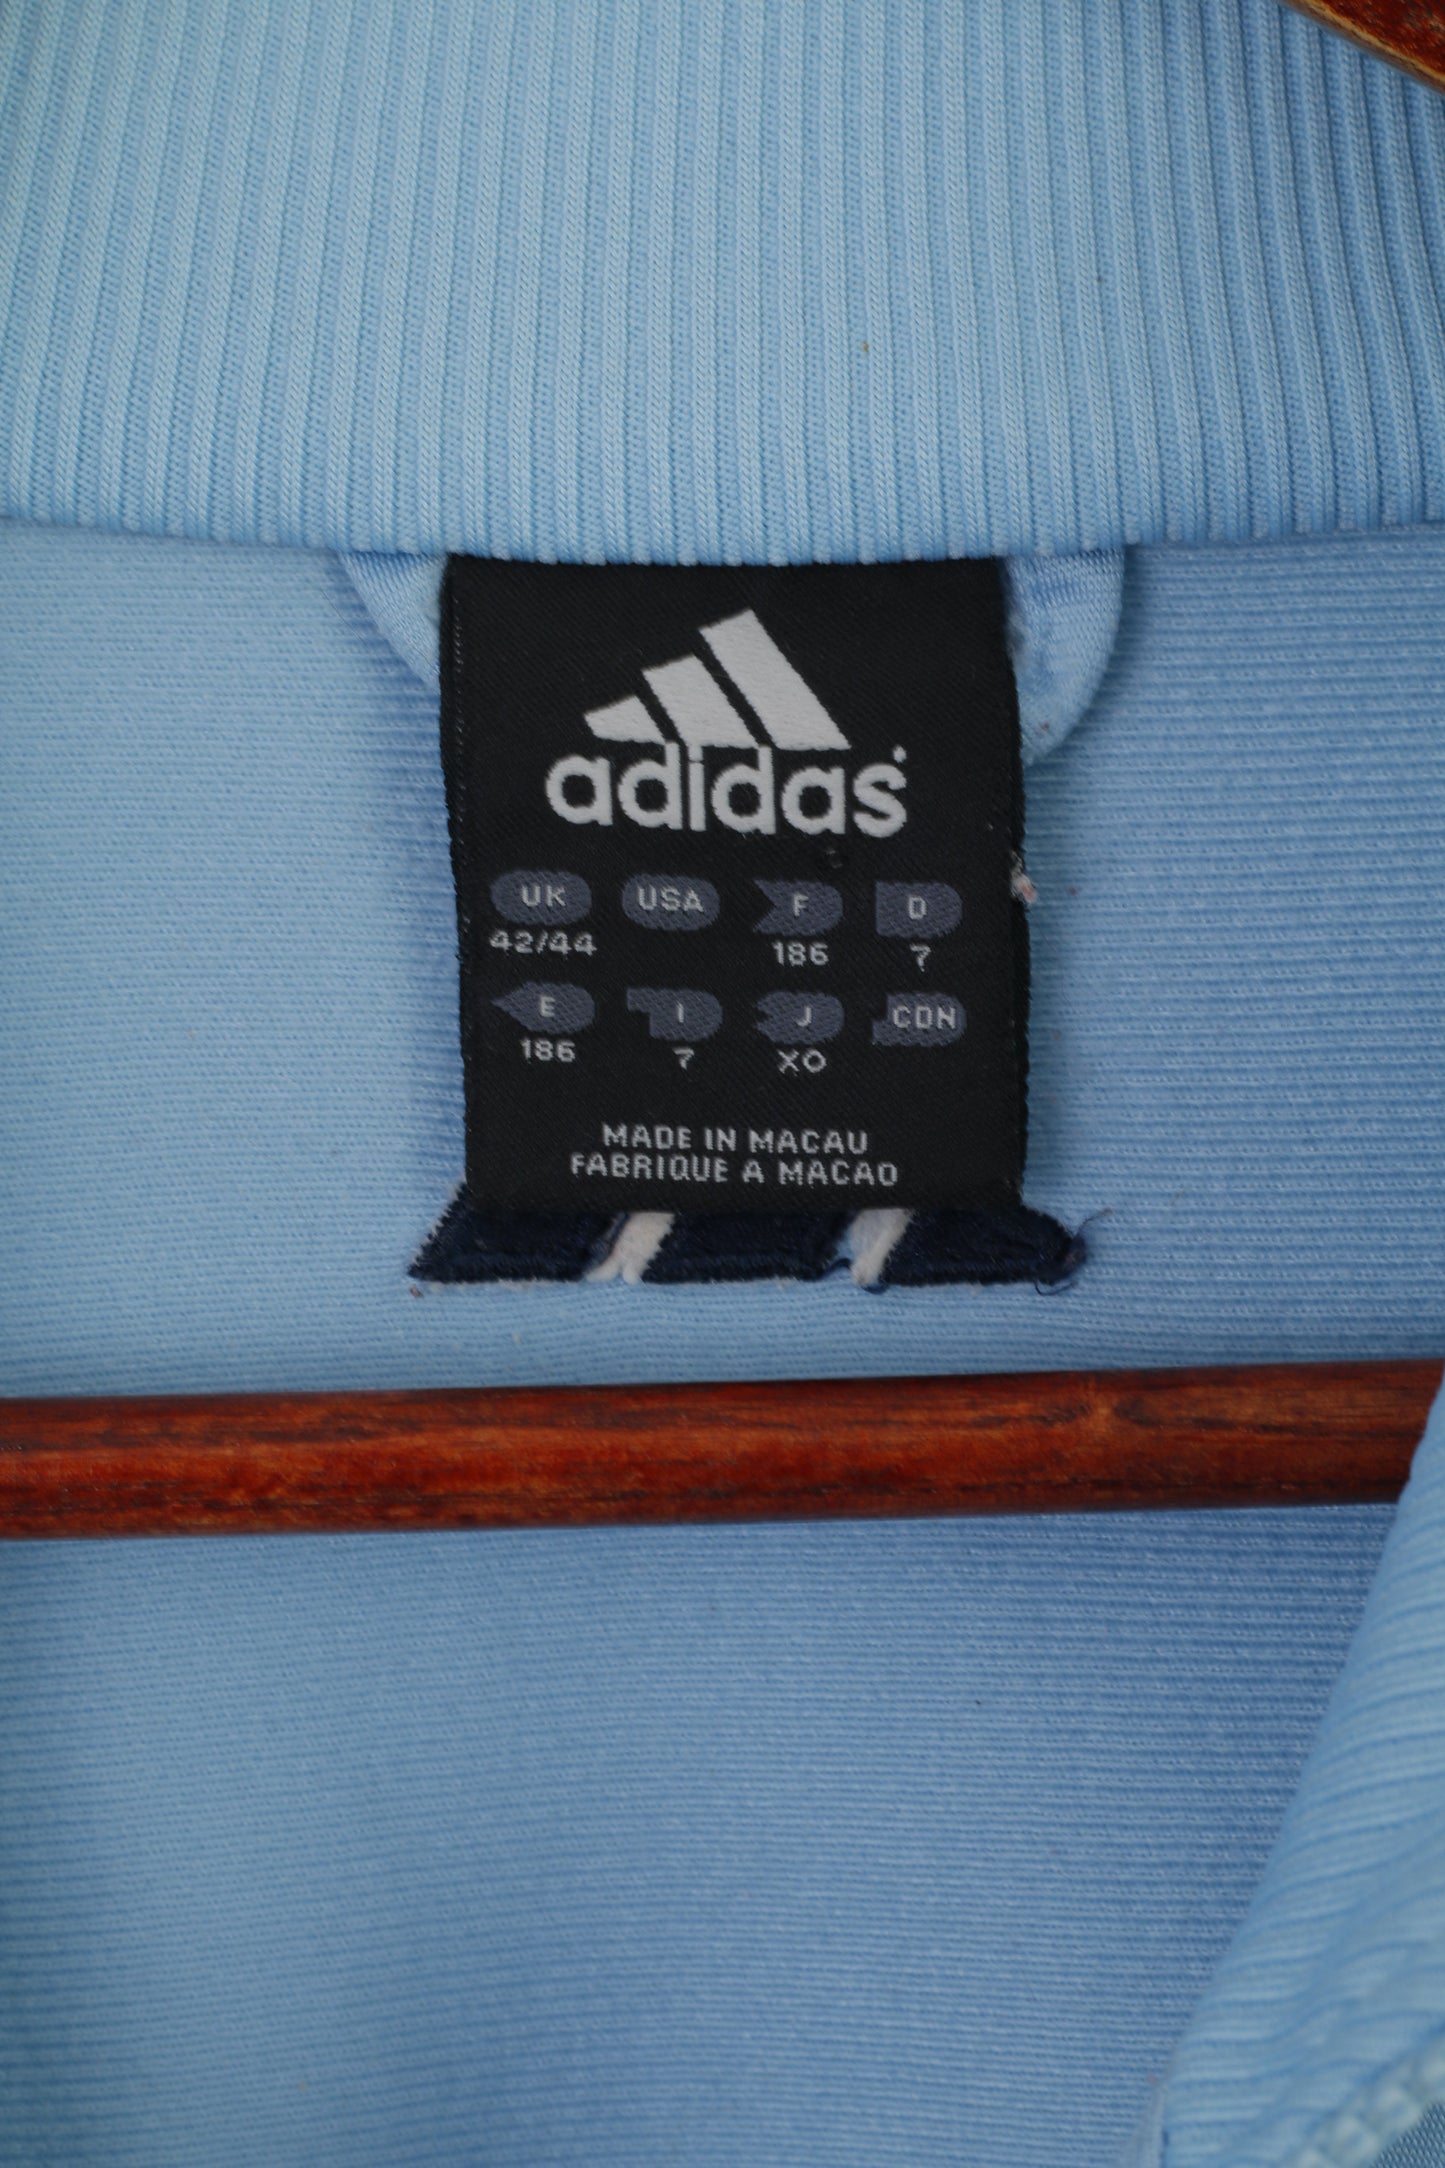 Adidas Homme 42/44 186 XL Sweat Bleu Clair Vintage Brillant Zip Up Oldschool Top